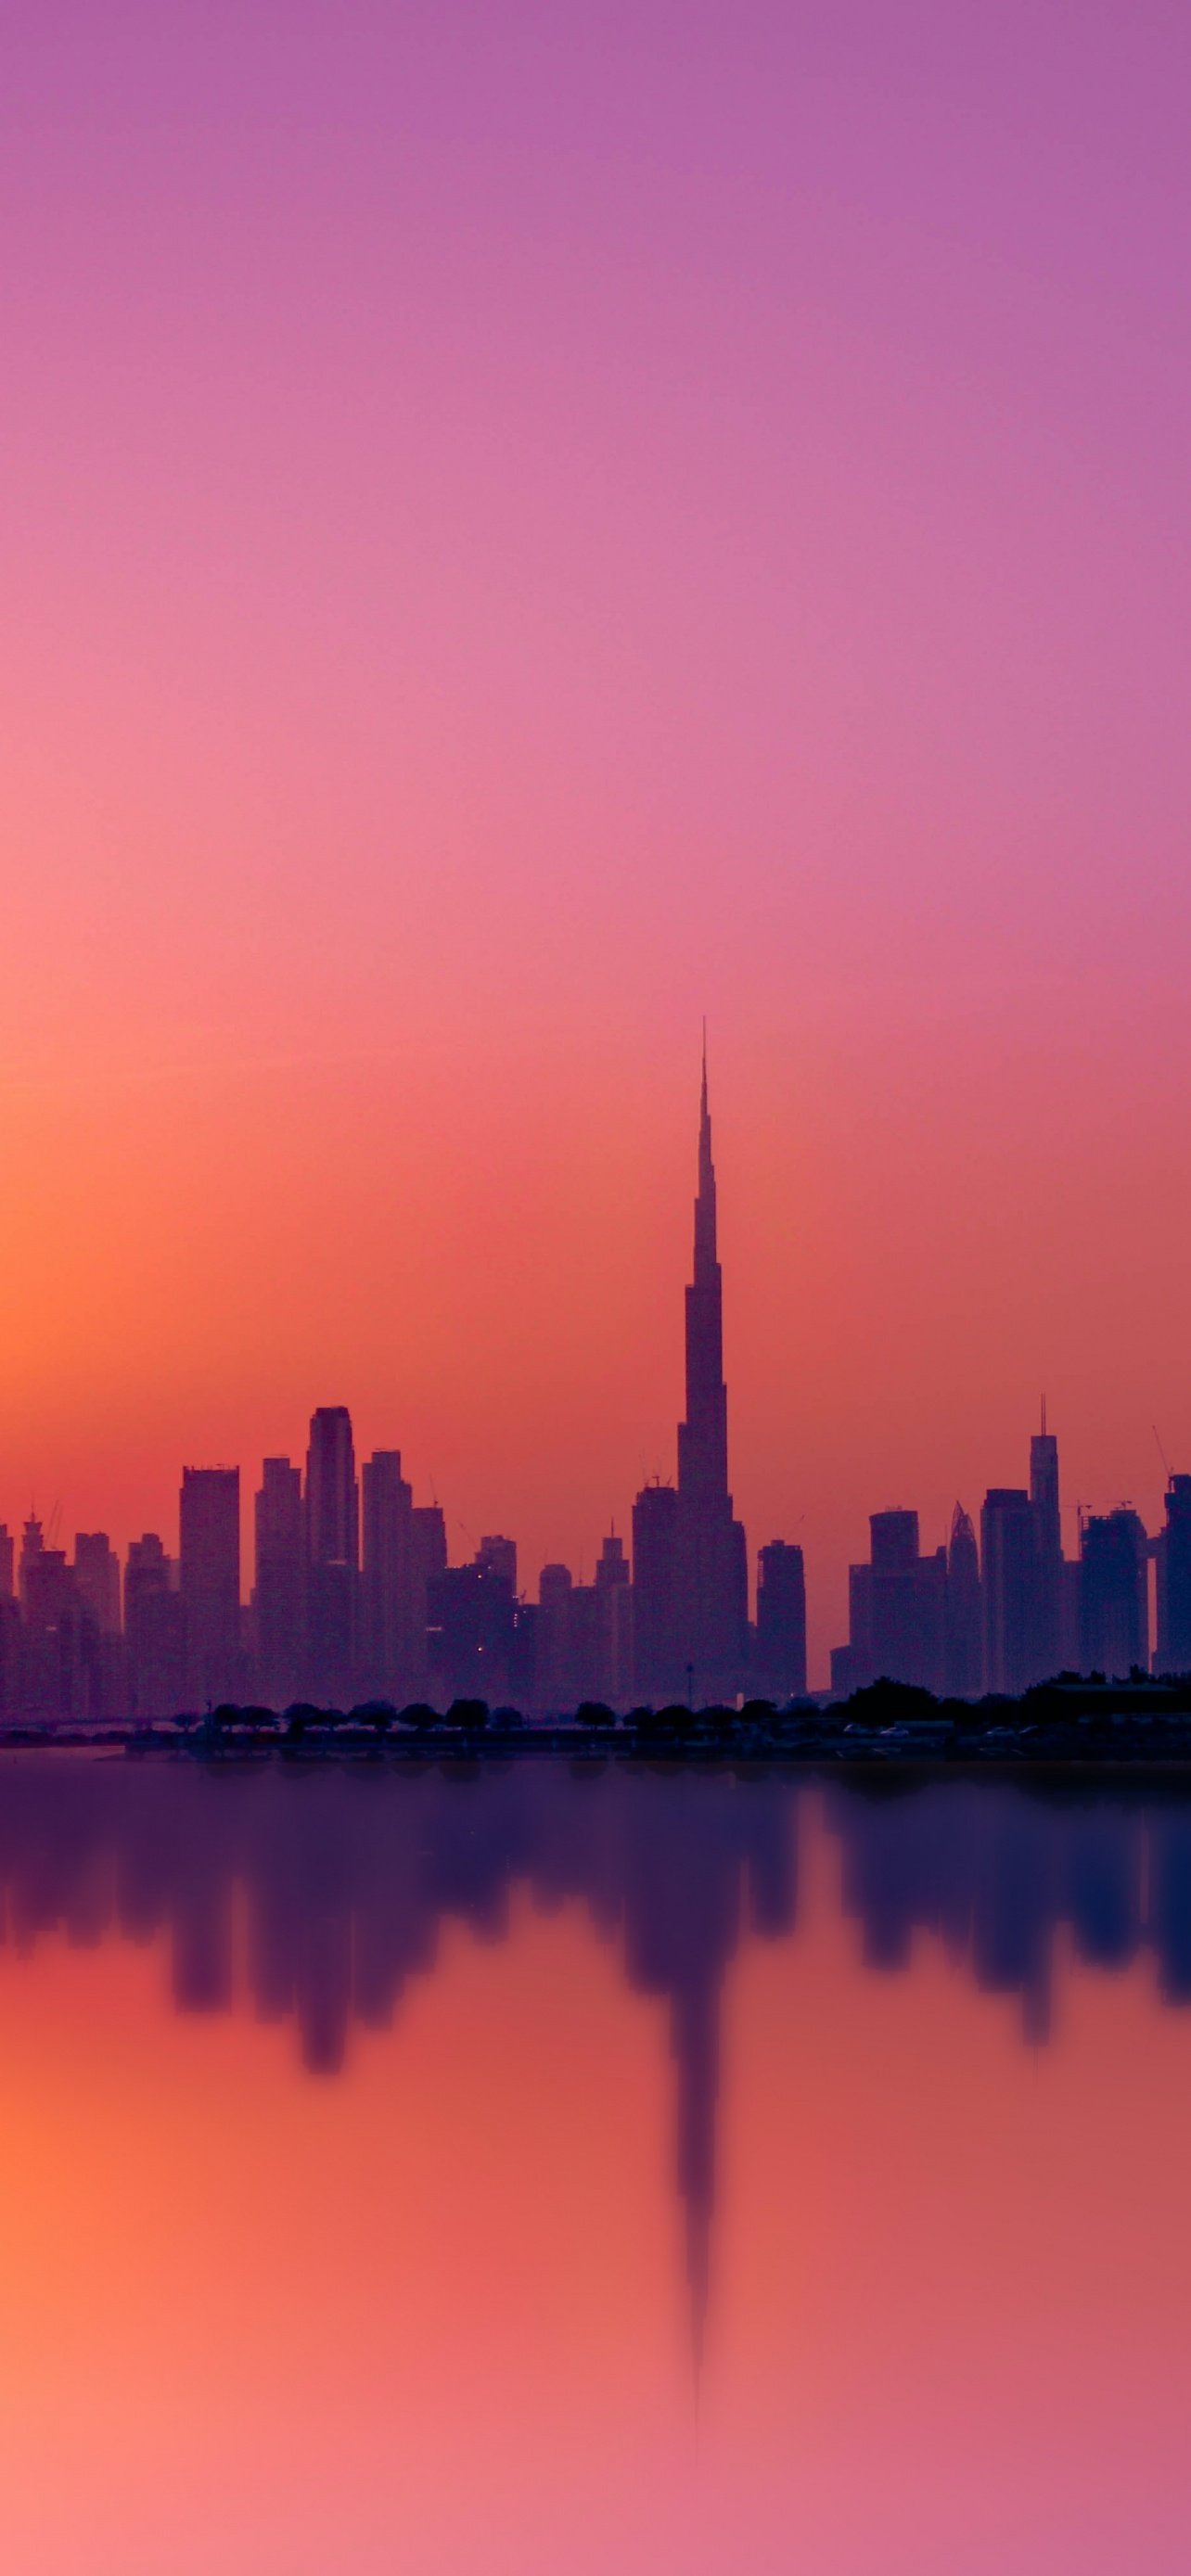 Dubai UAE evening city skyscrapers lights roads 750x1334 iPhone 8766S  wallpaper background picture image